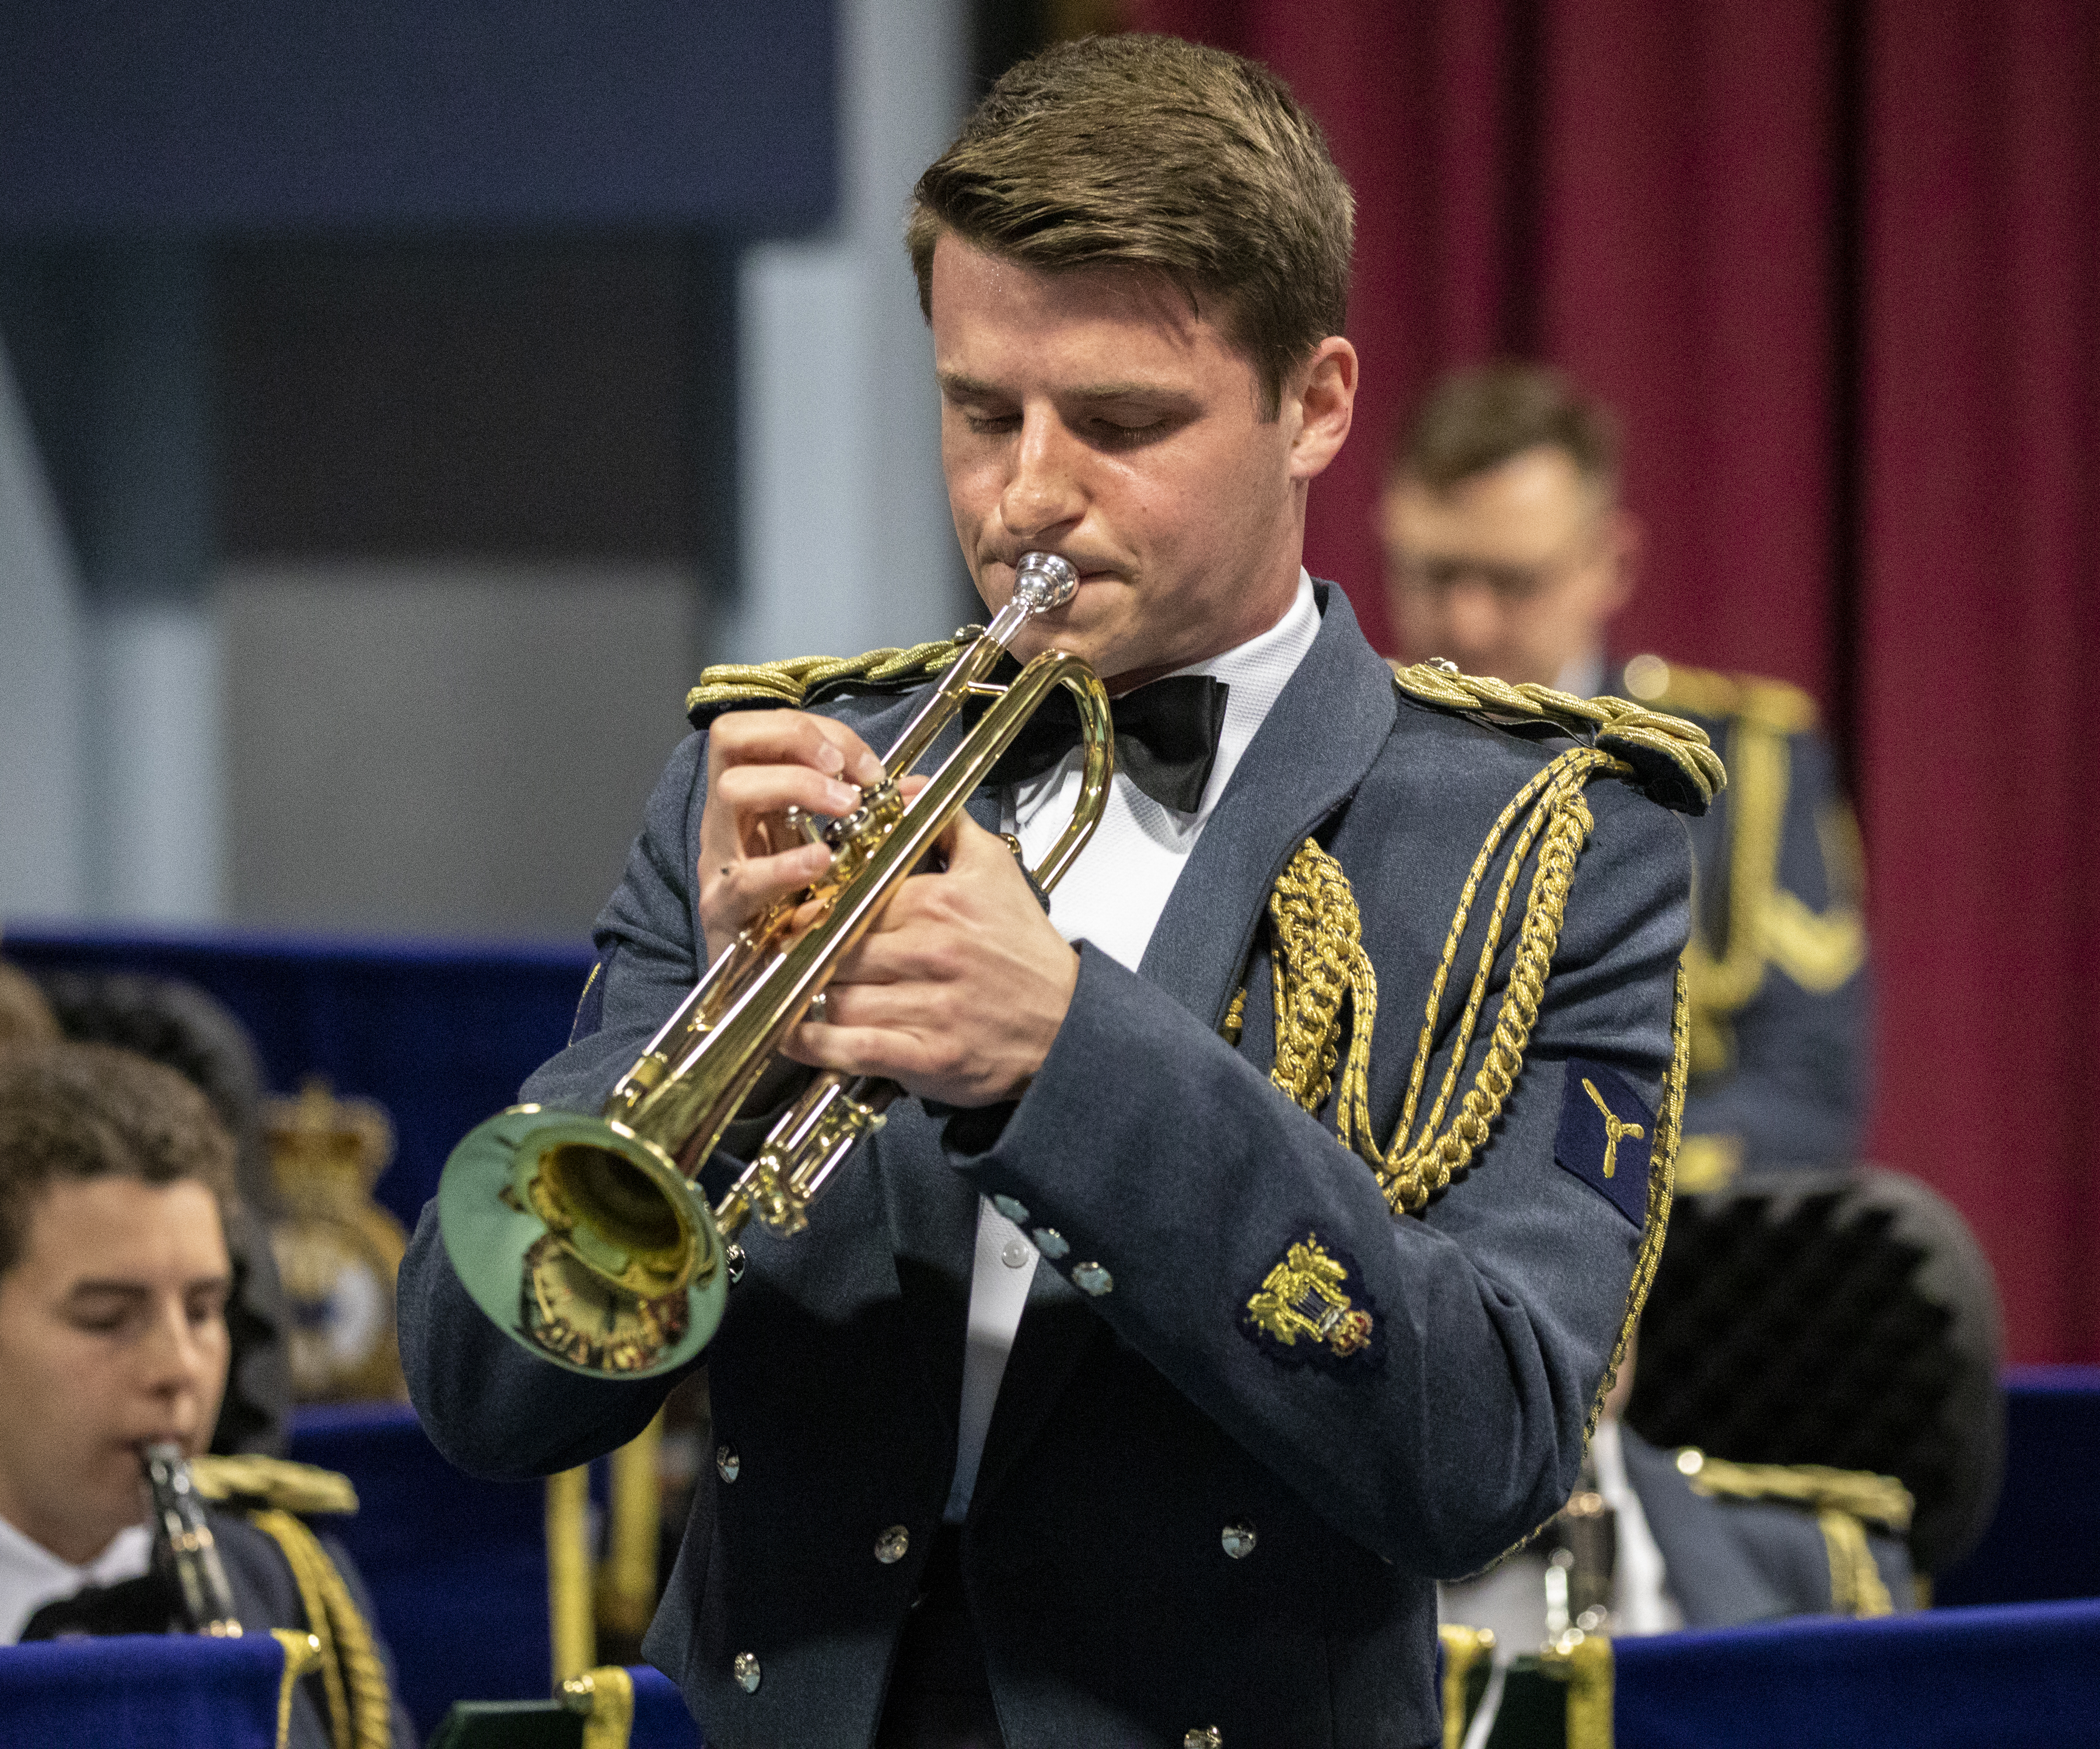 RAF Musician plays trumpet.